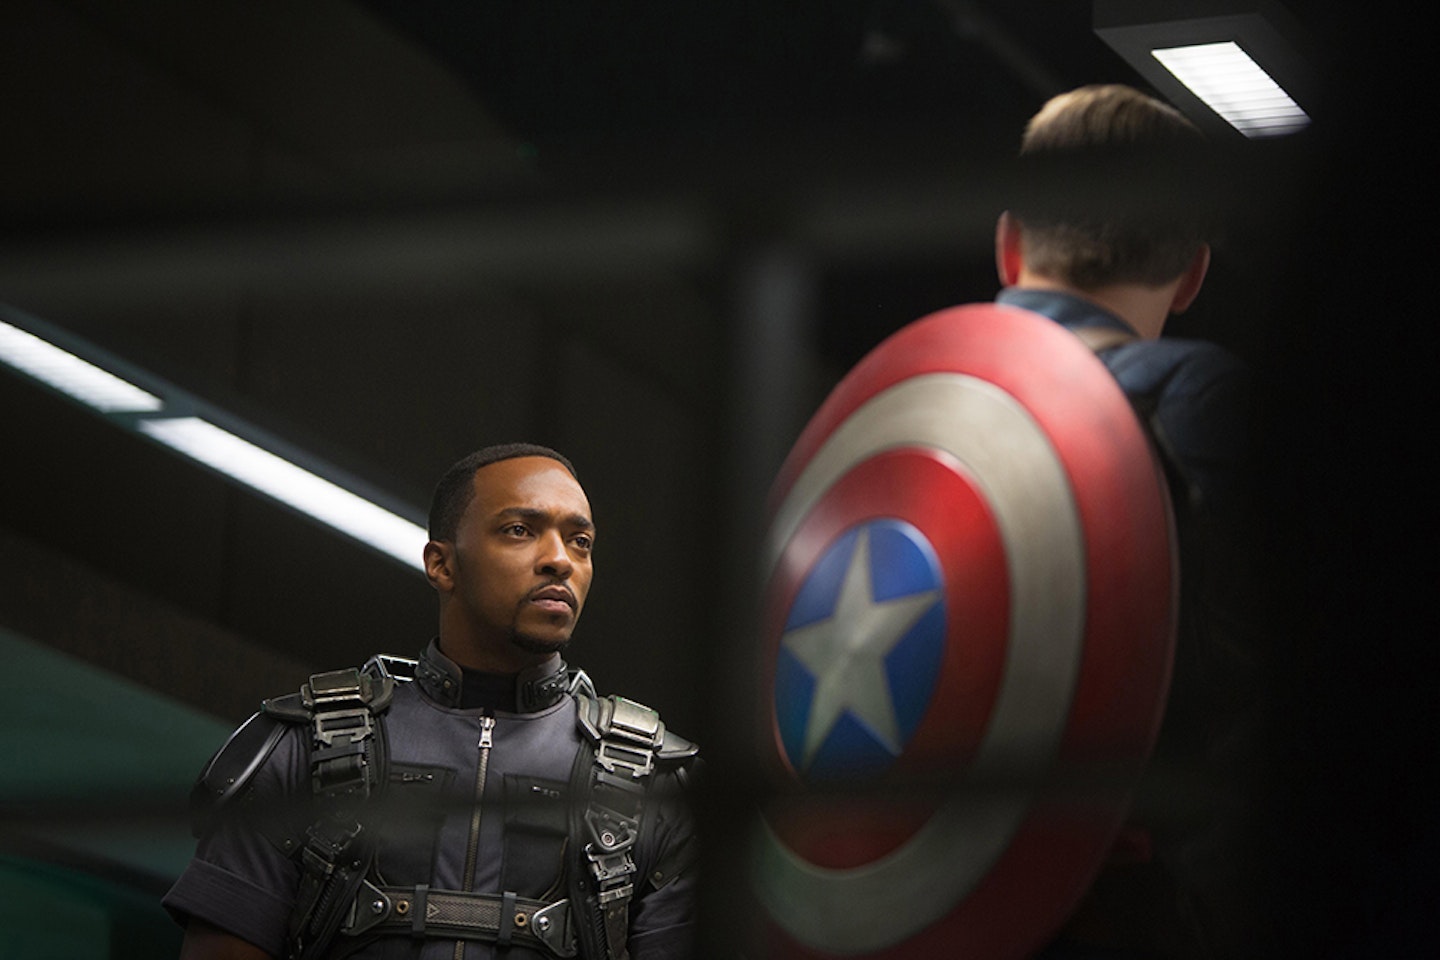 Captain-America-Civil-War-will-be-a-suspense-thriller